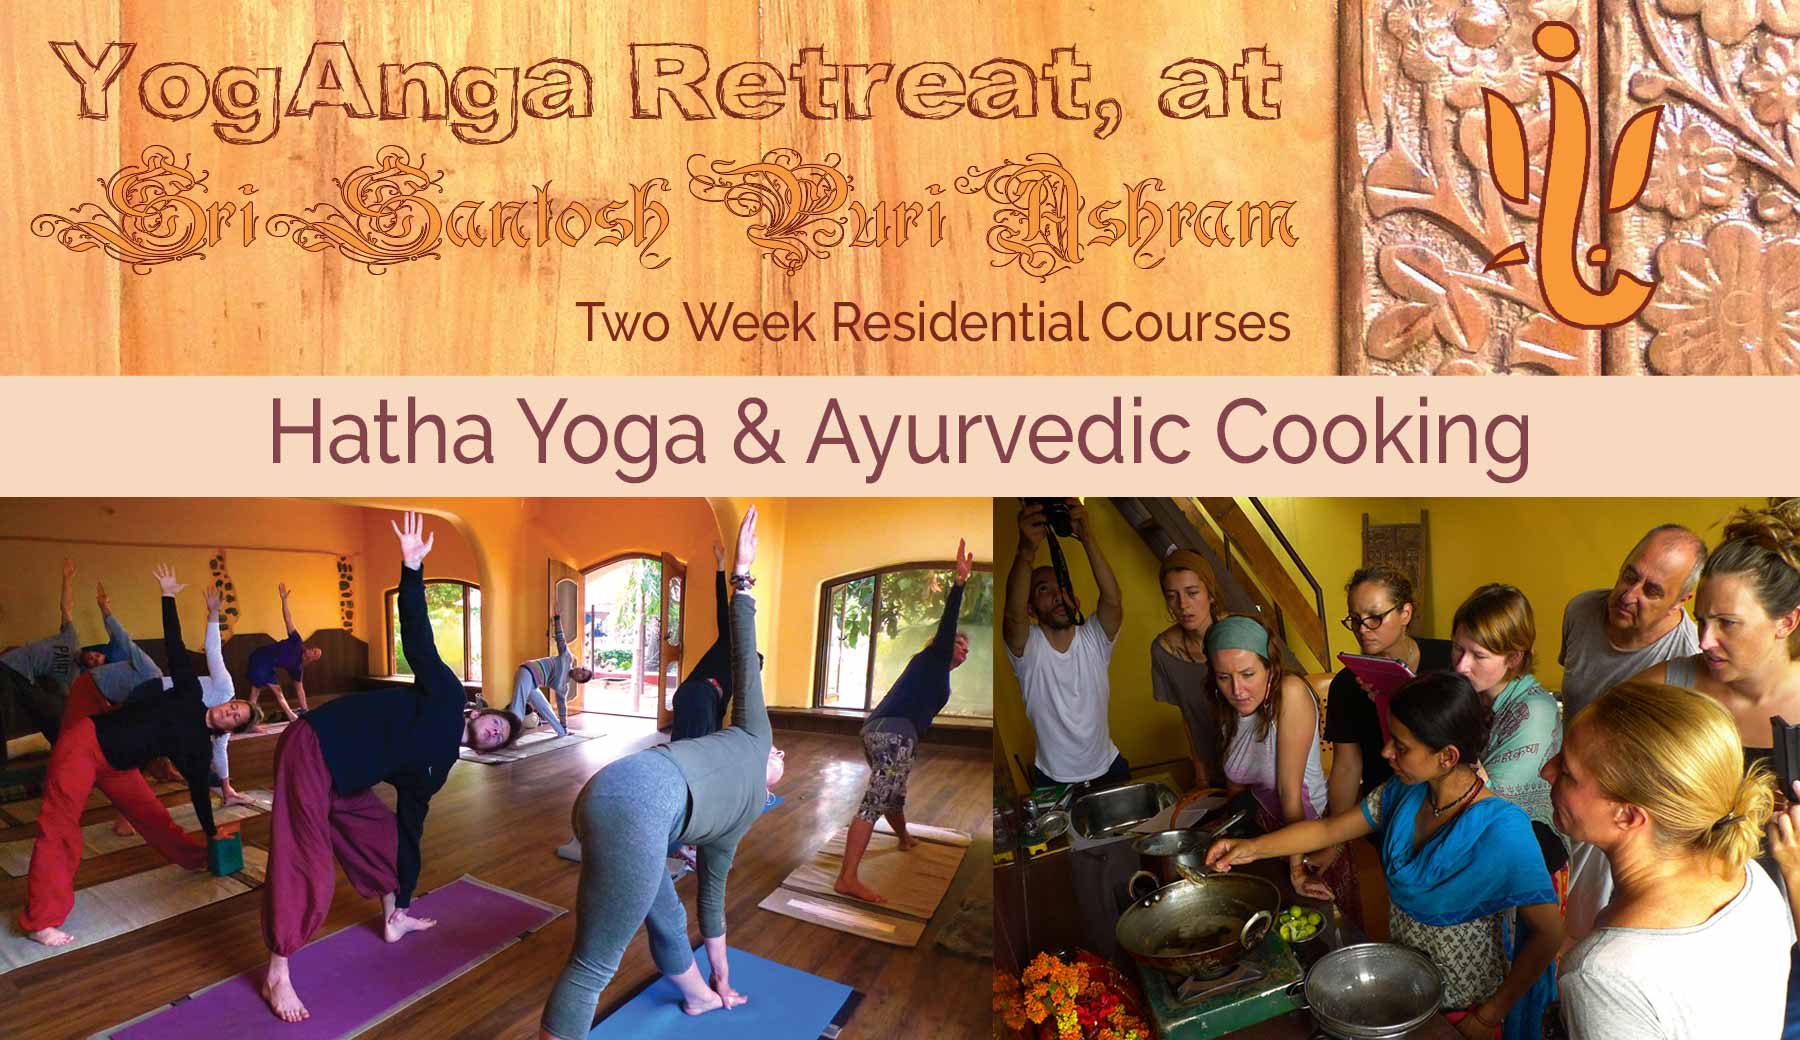 yoganga.org - YogAnga Retreat at Sri Santosh Puri Ashram - Hatha Yoga & Ayurvedic Cooking two week Residential Course